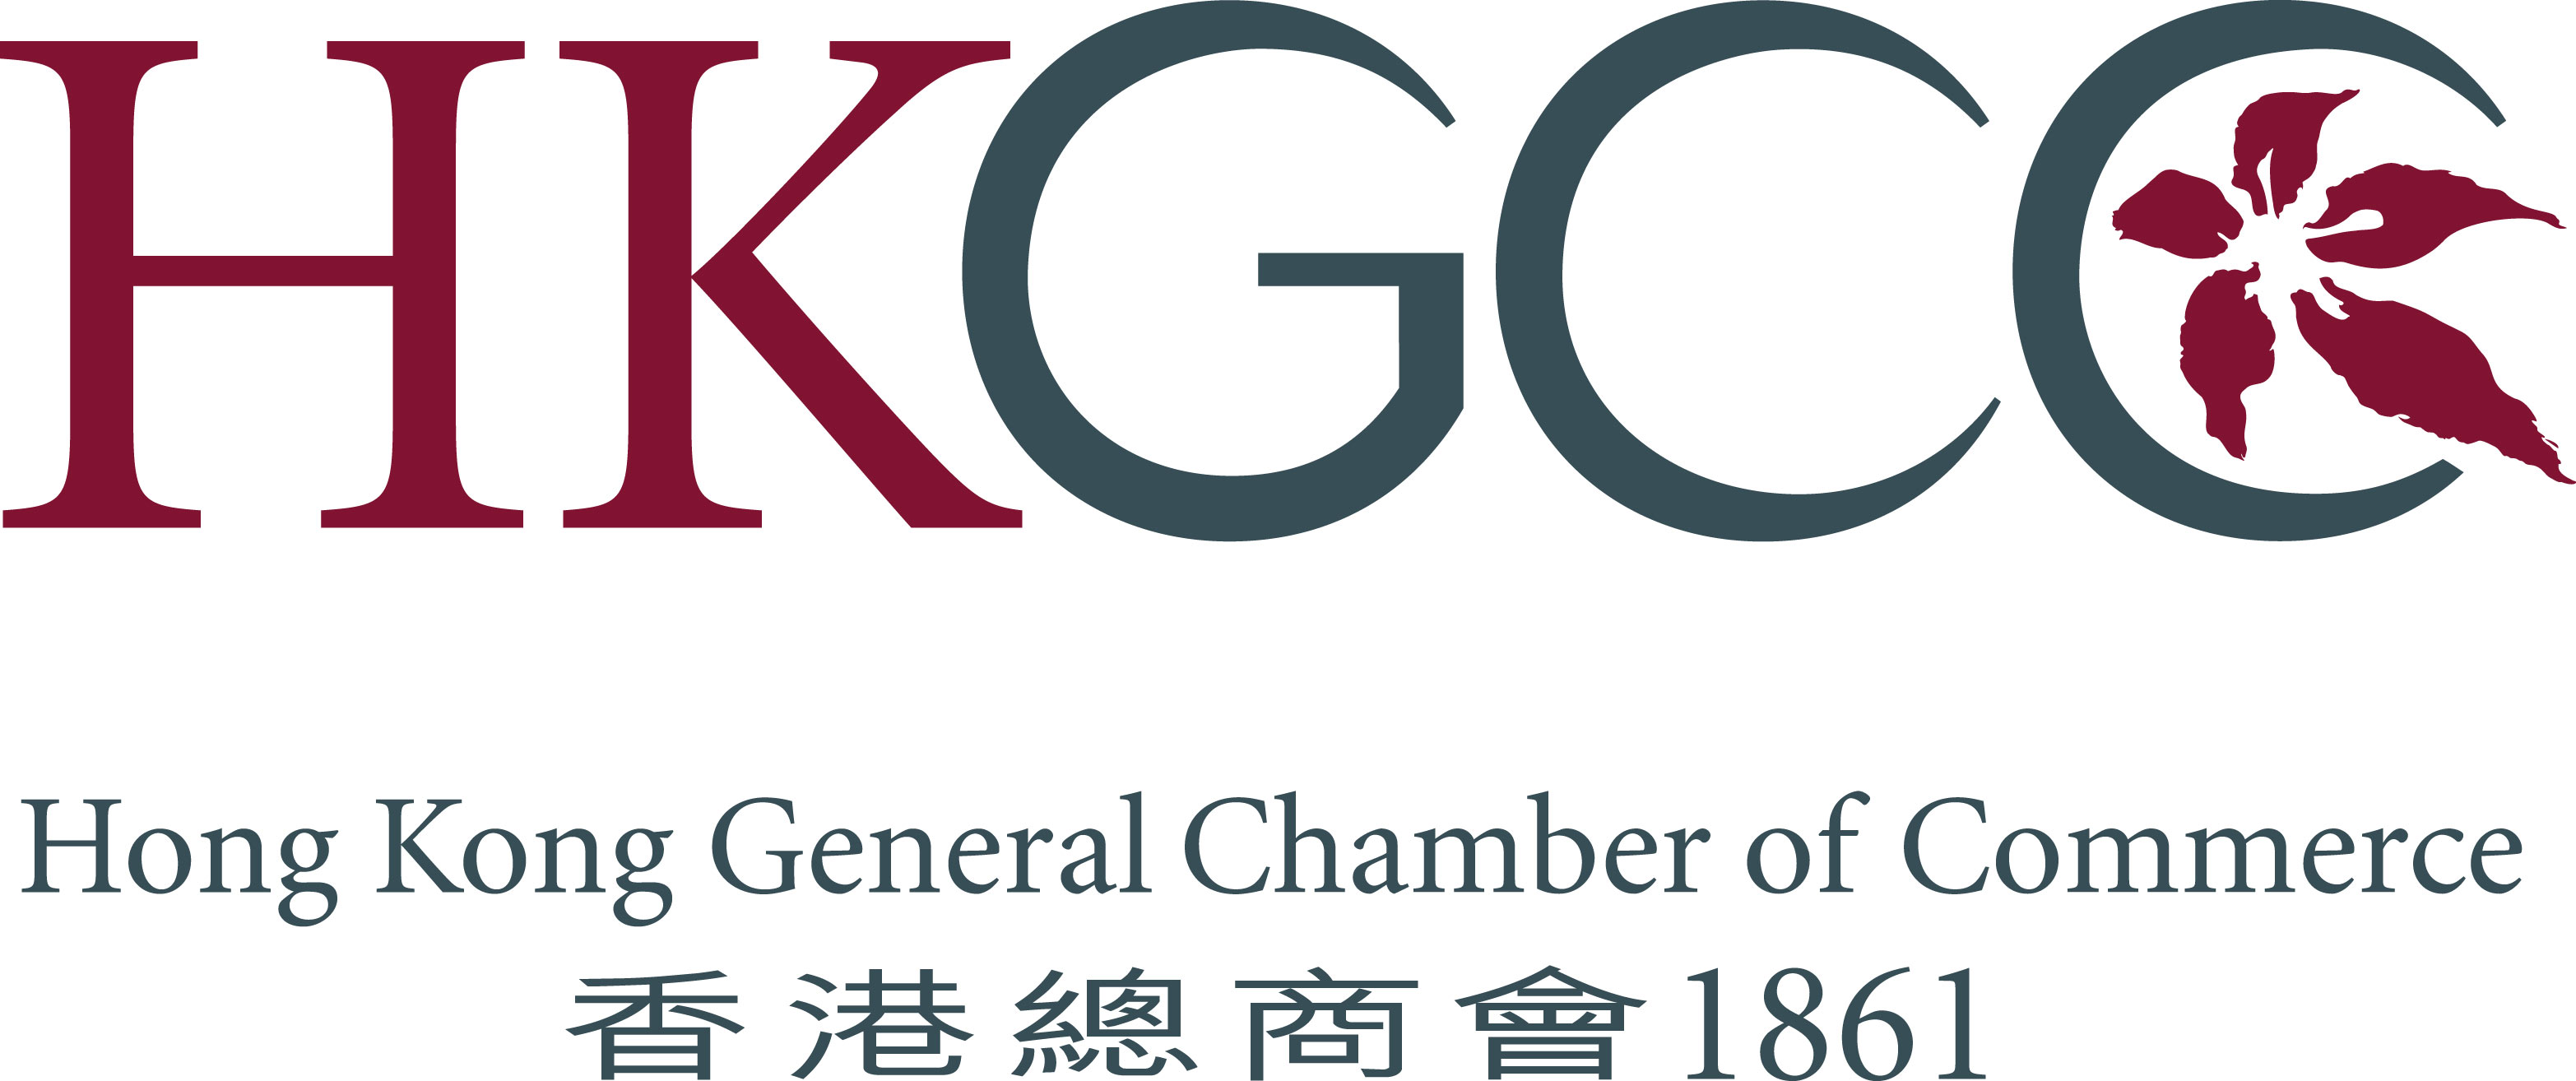 Hong Kong General Chamber of Commerce 